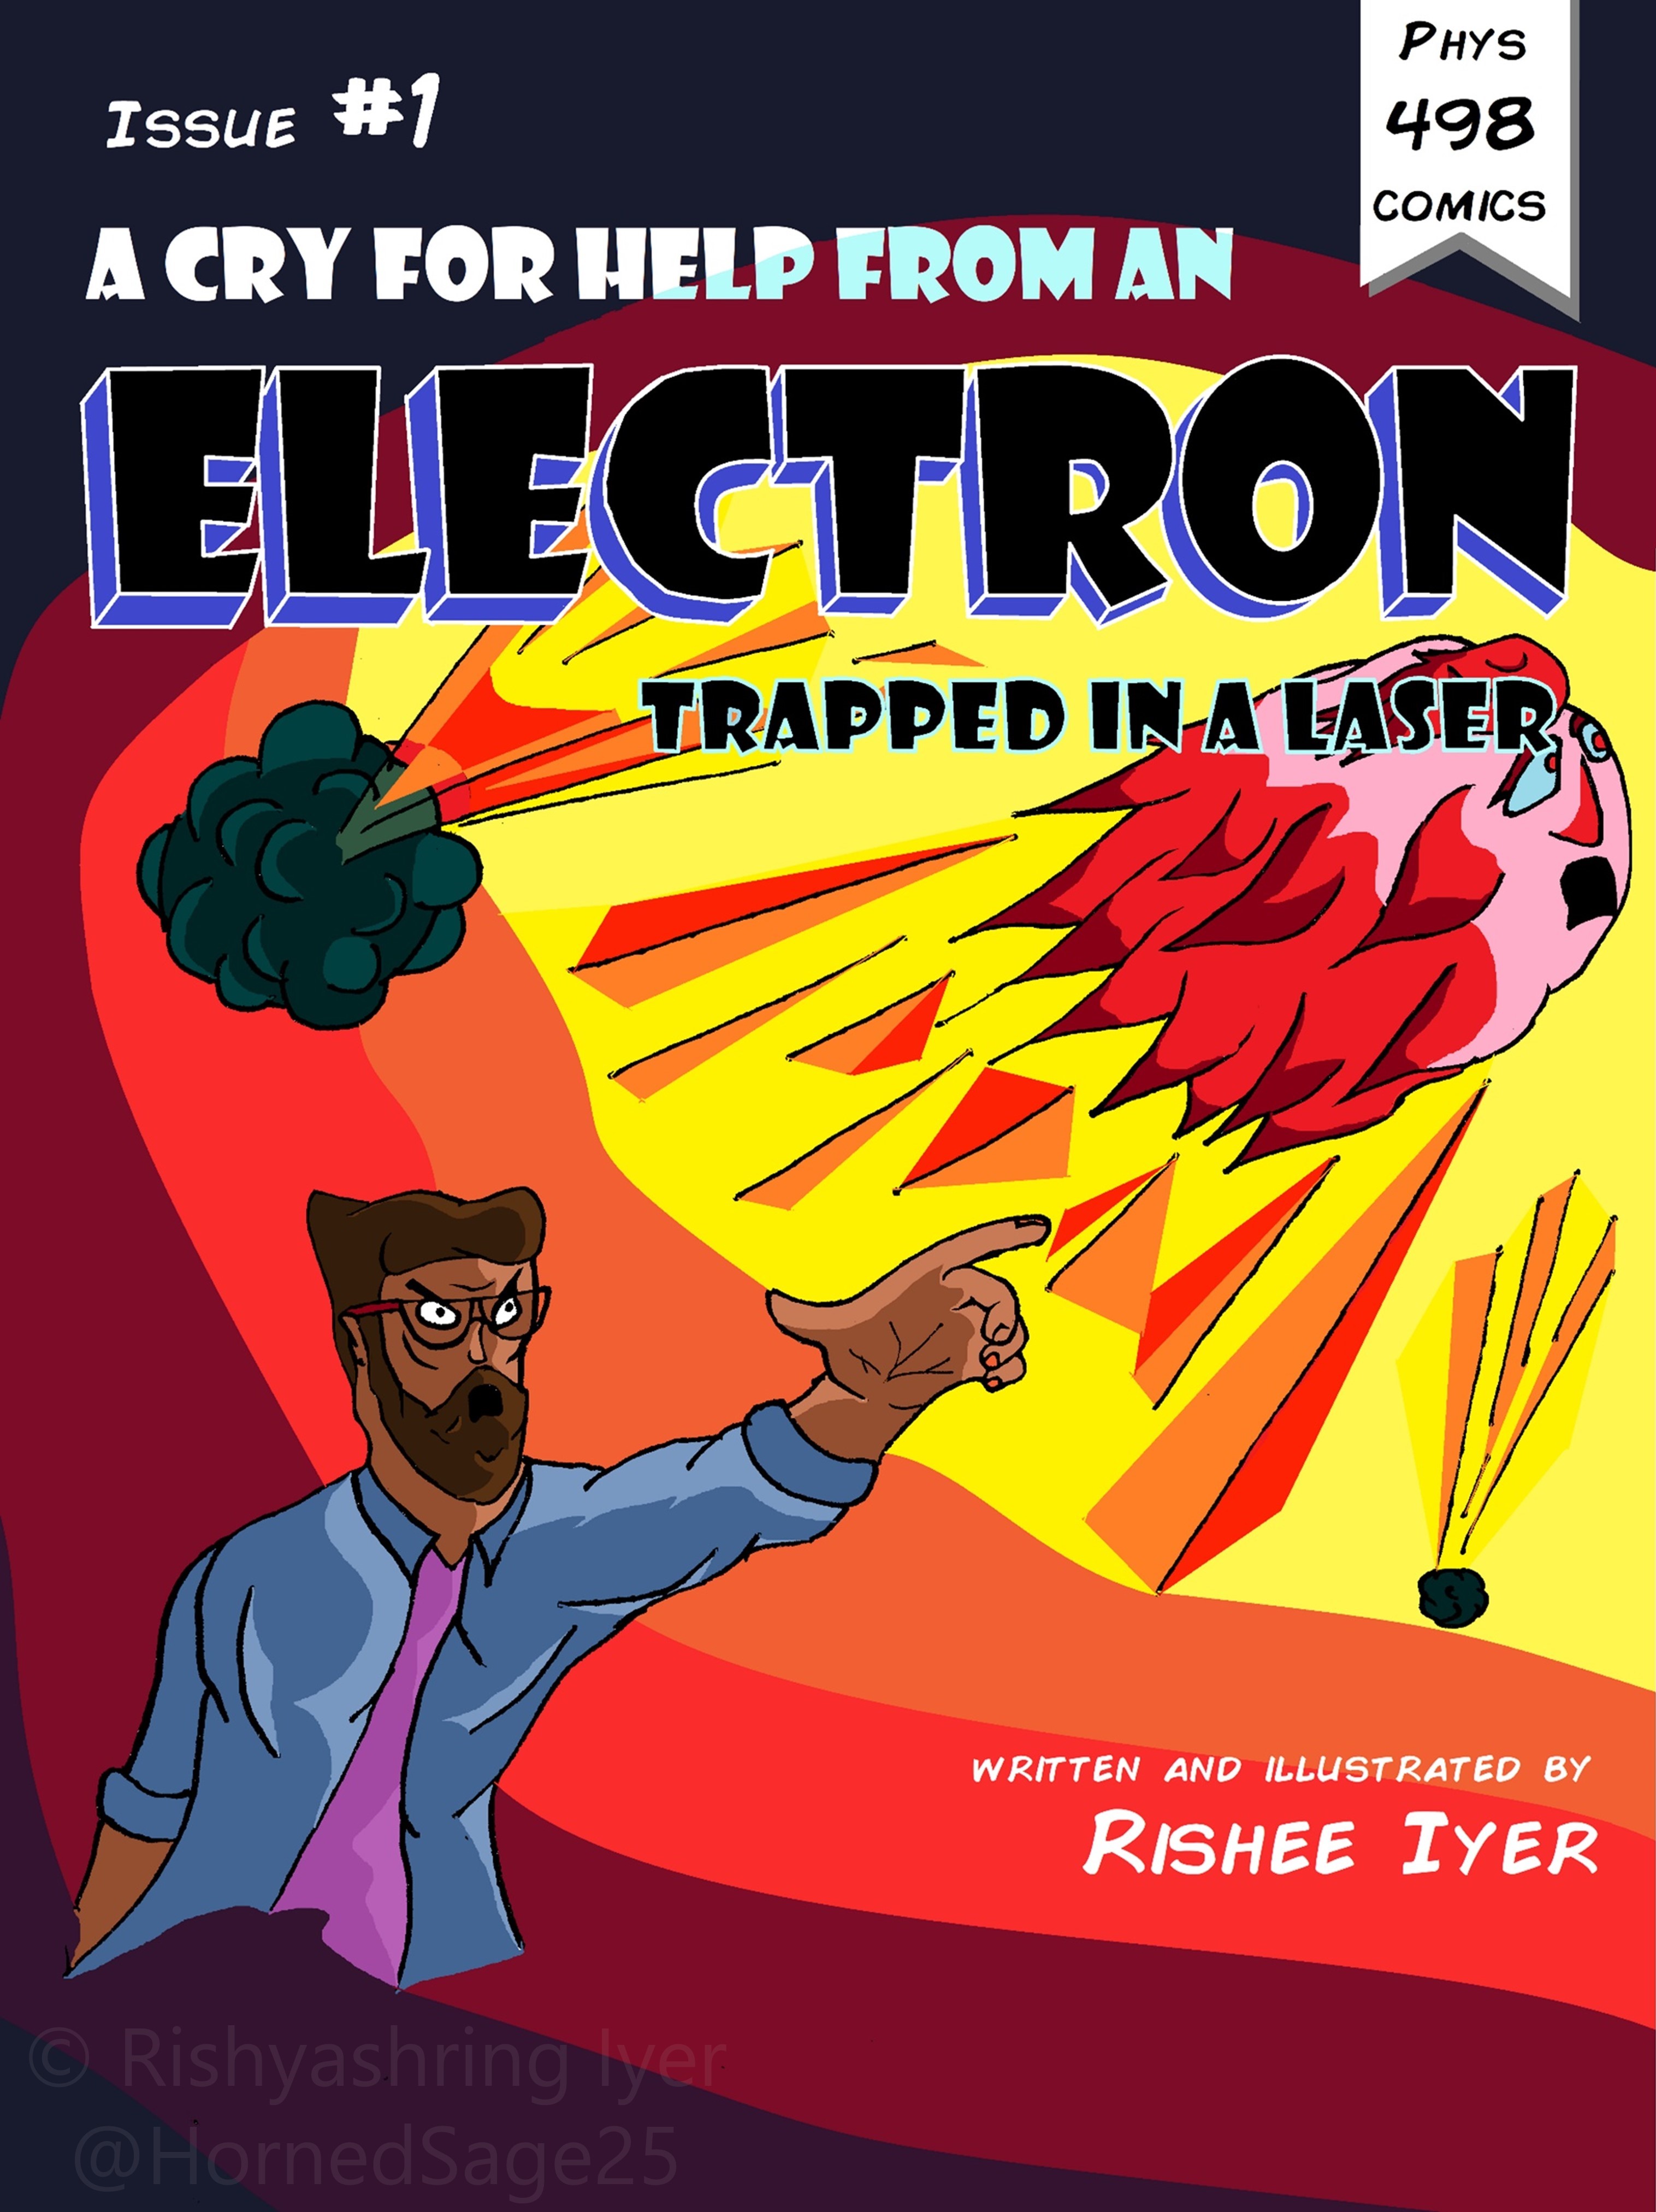 Laser comic cover